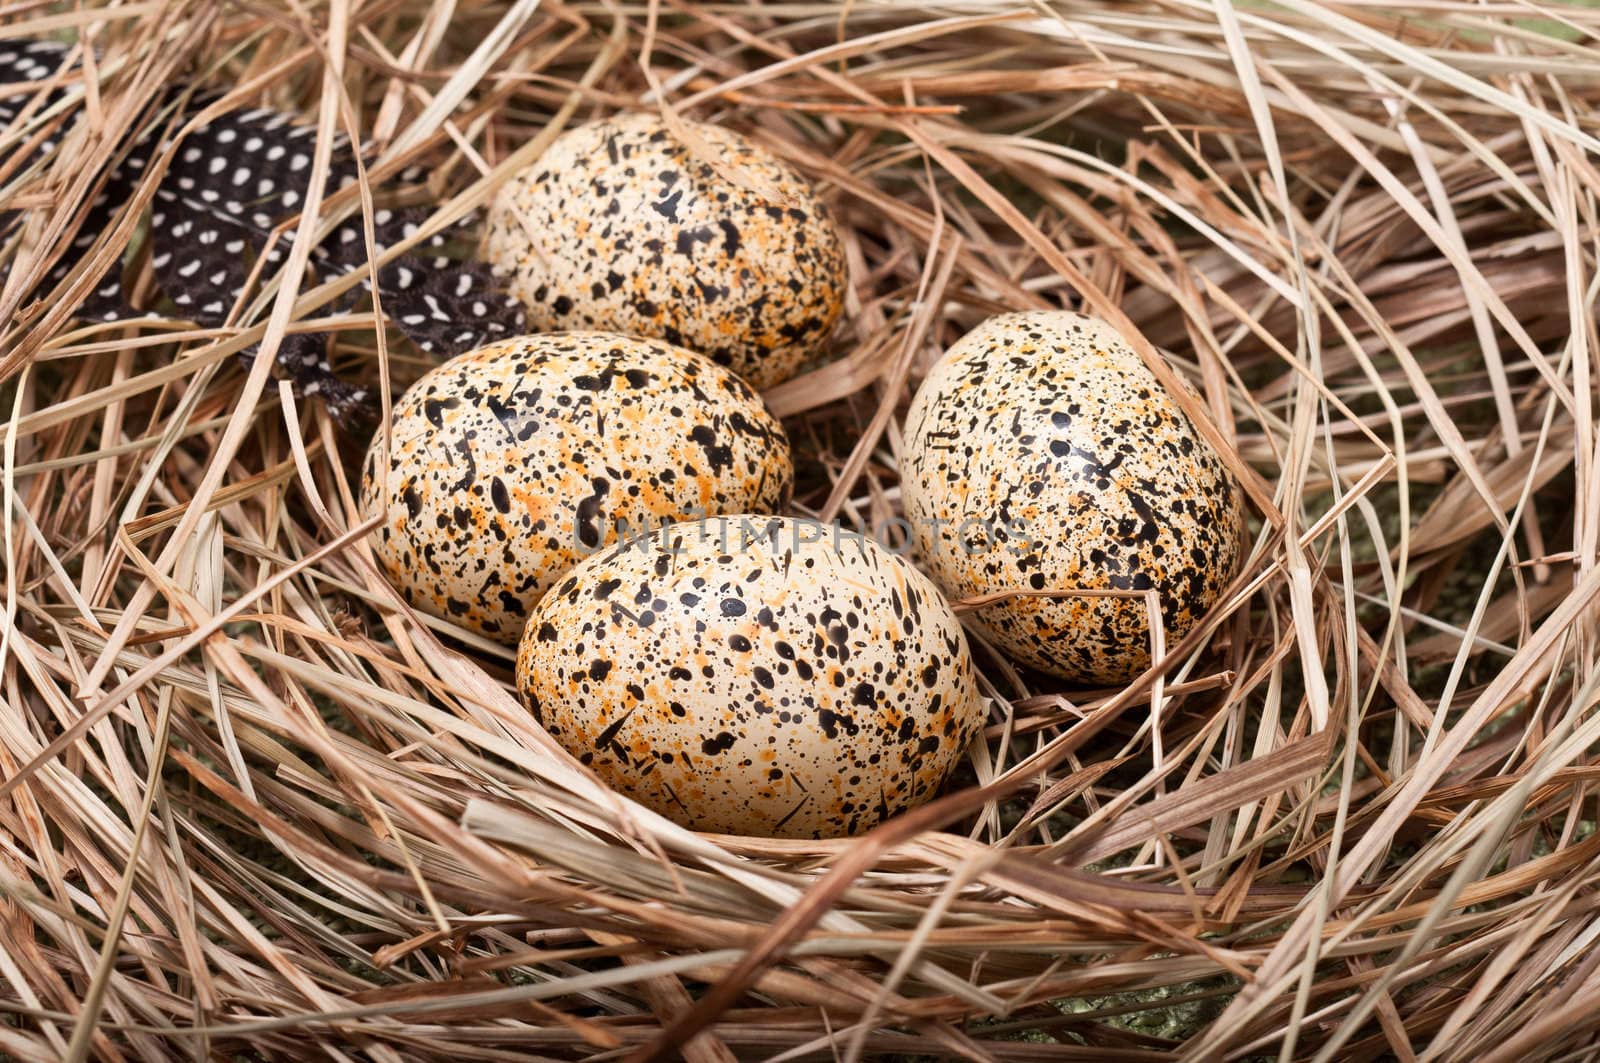 Speckled bird eggs in a grass nest